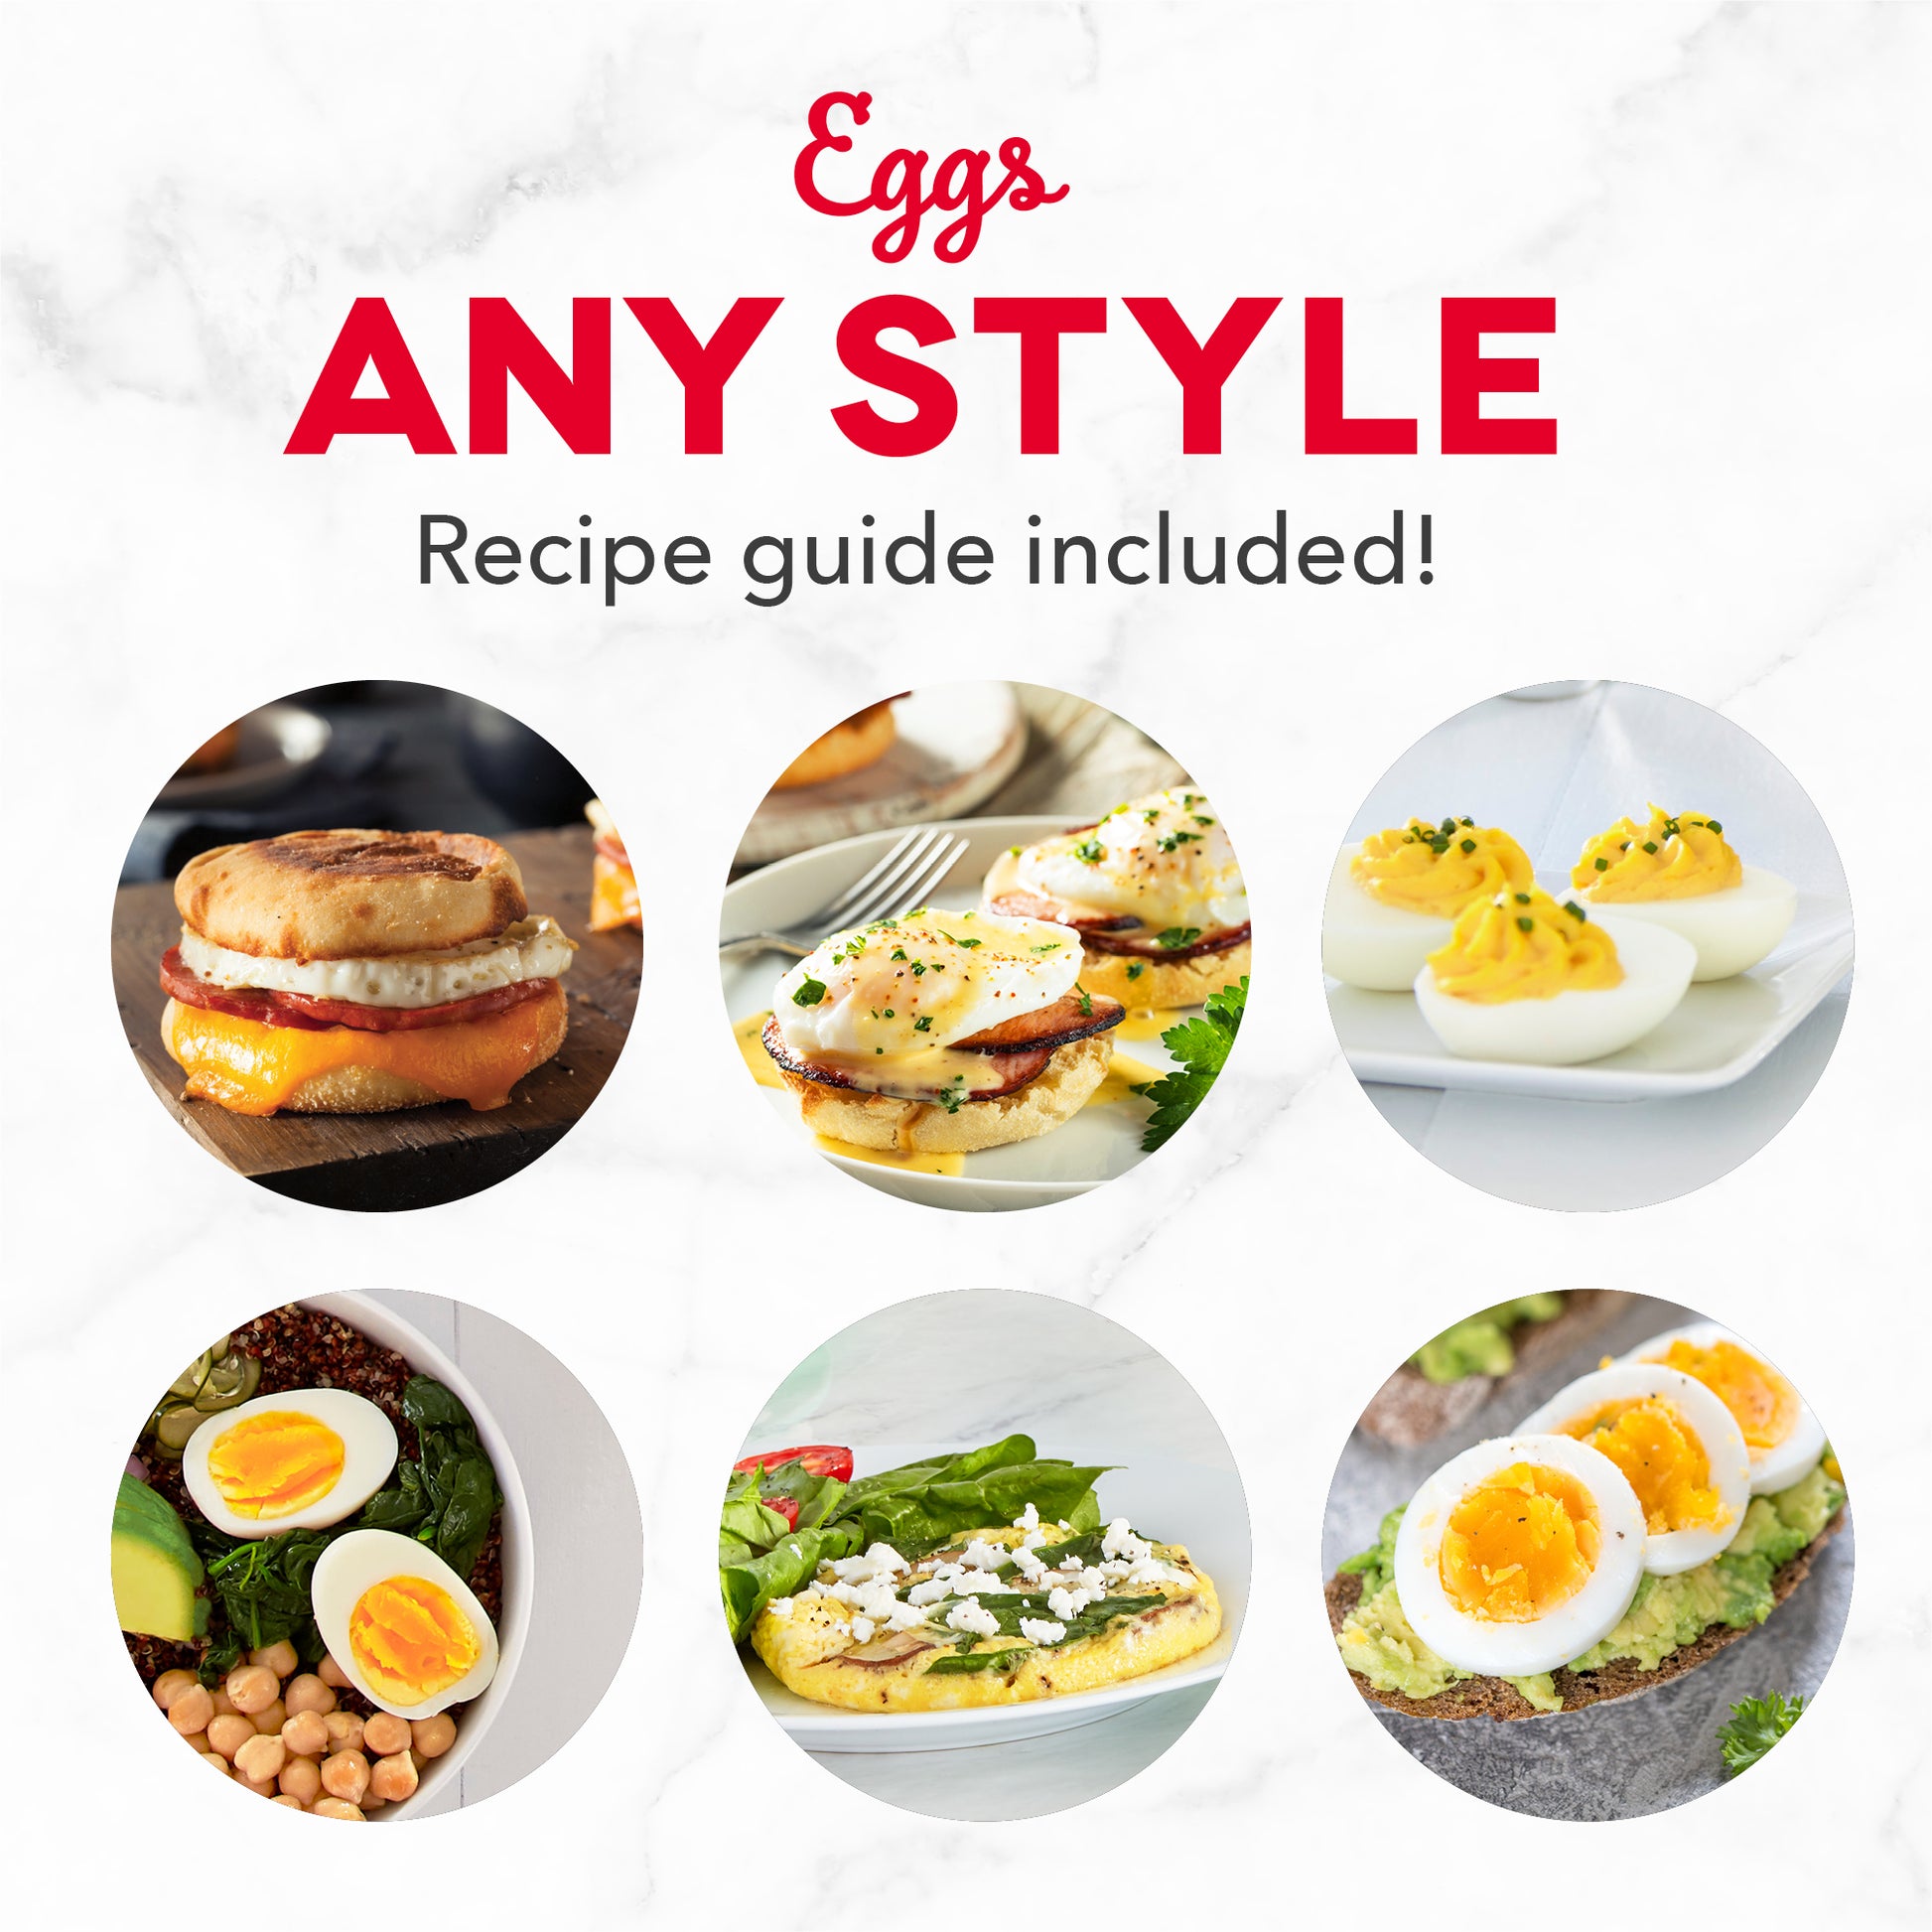 Dash Rapid 6 Egg Cooker – Bobs Retail Biz